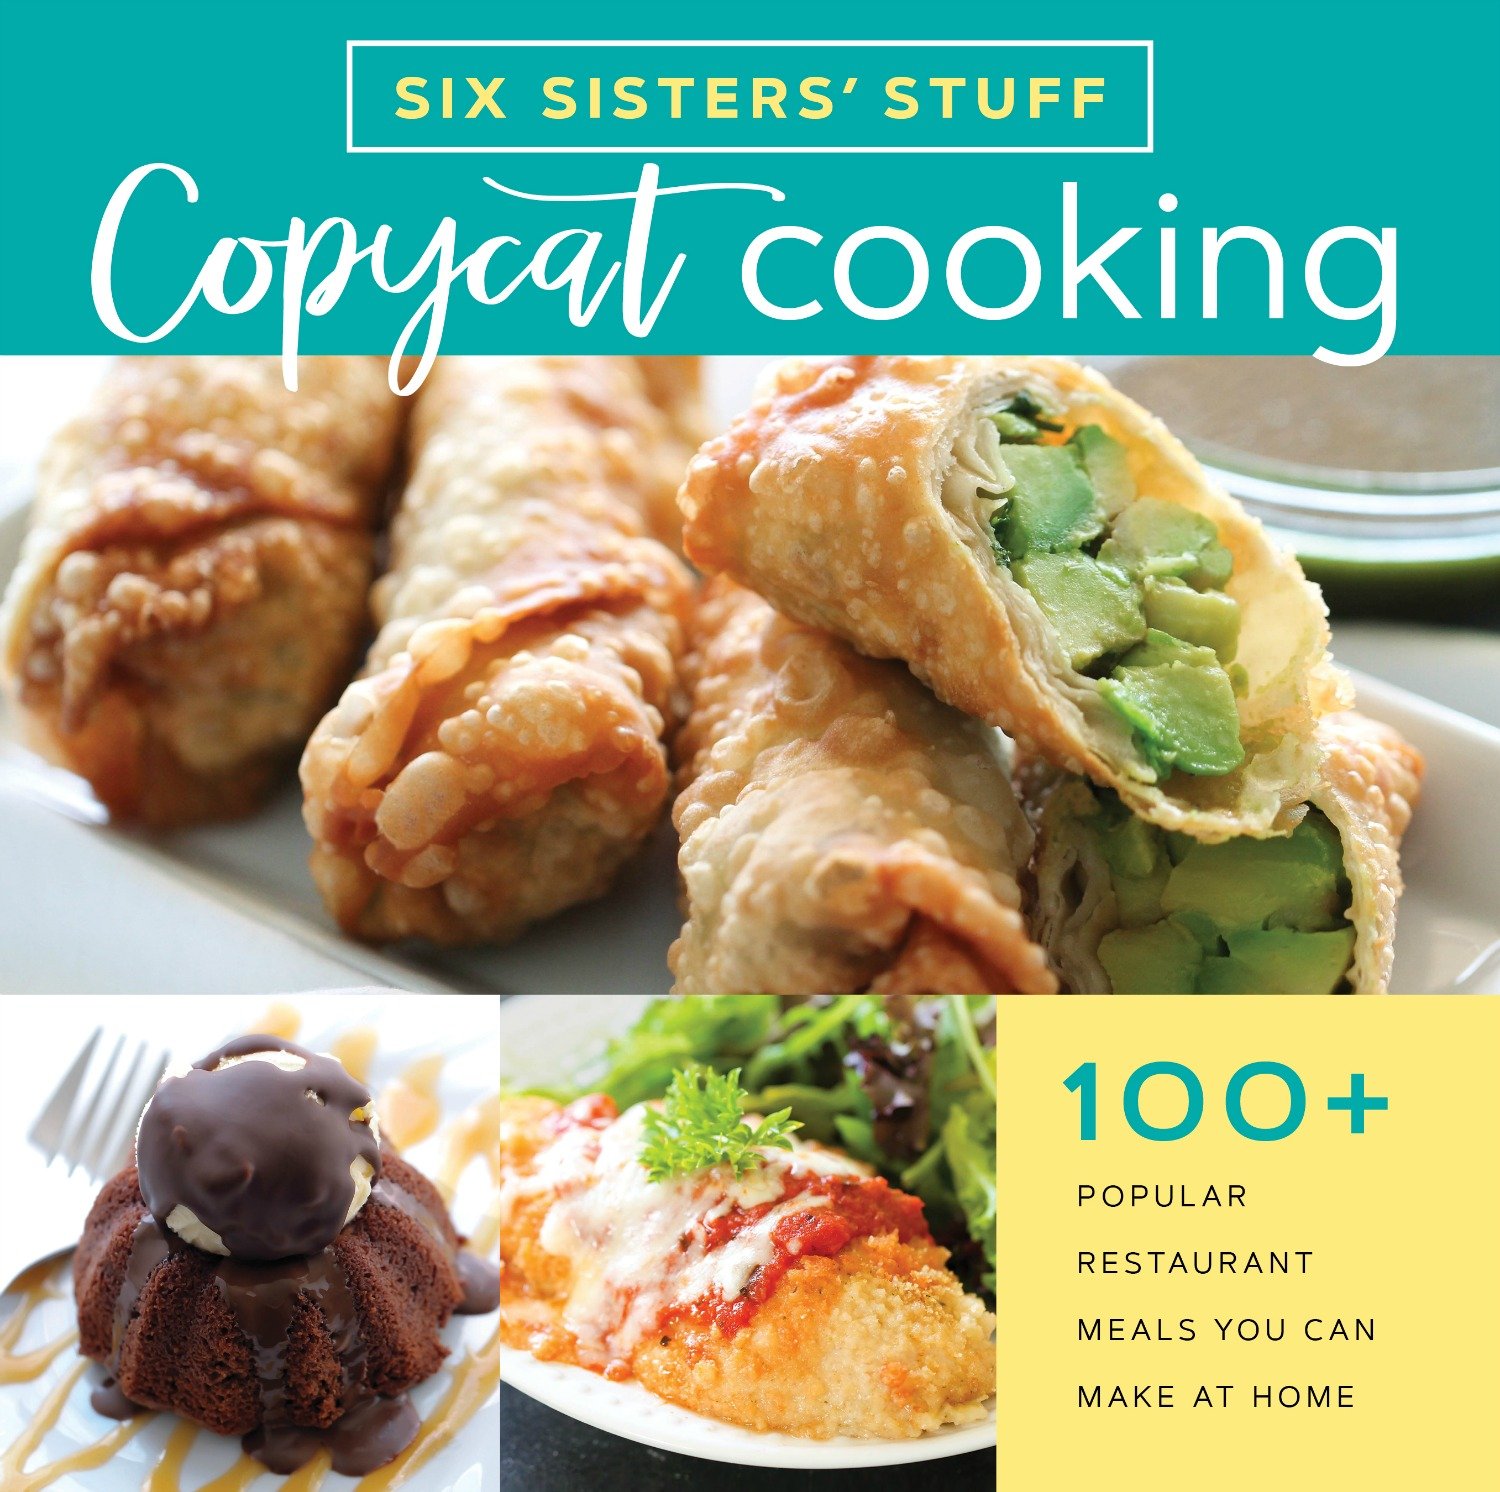 Six Sisters' Stuff Copycat Cooking Cook Book